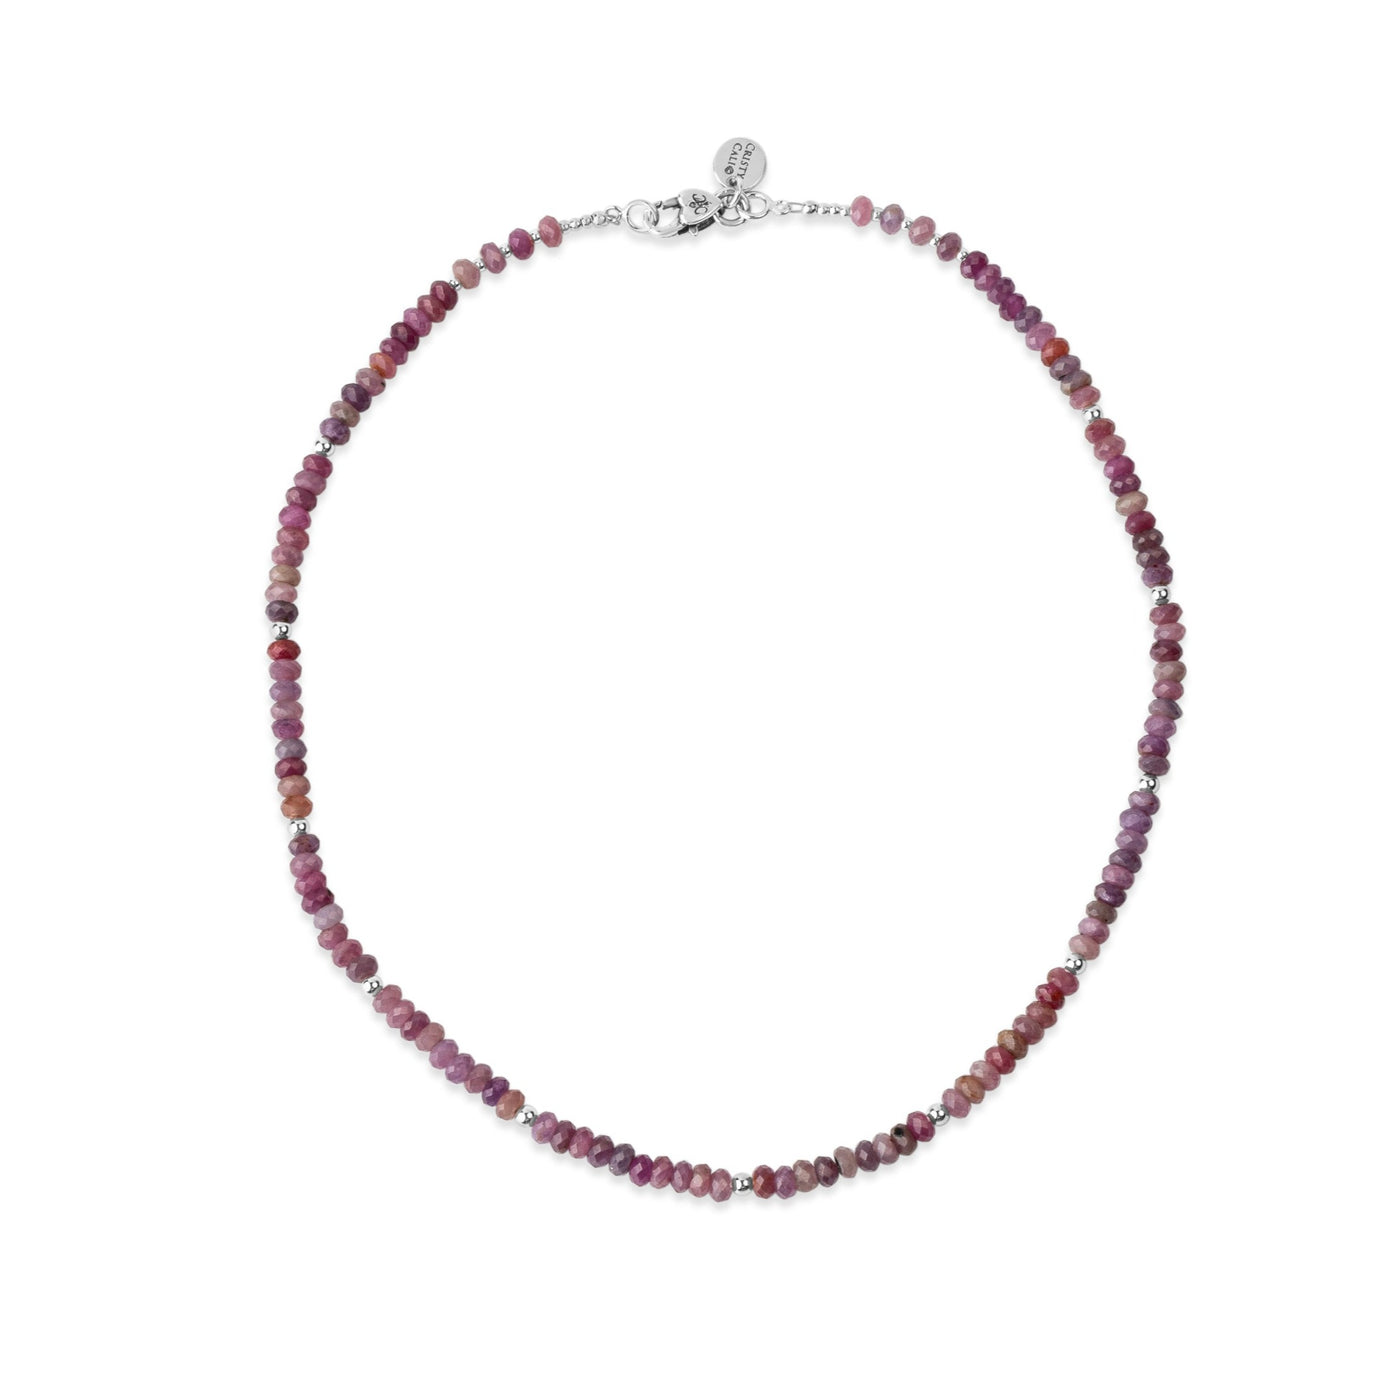 Rubies of Devotion Signature Necklace